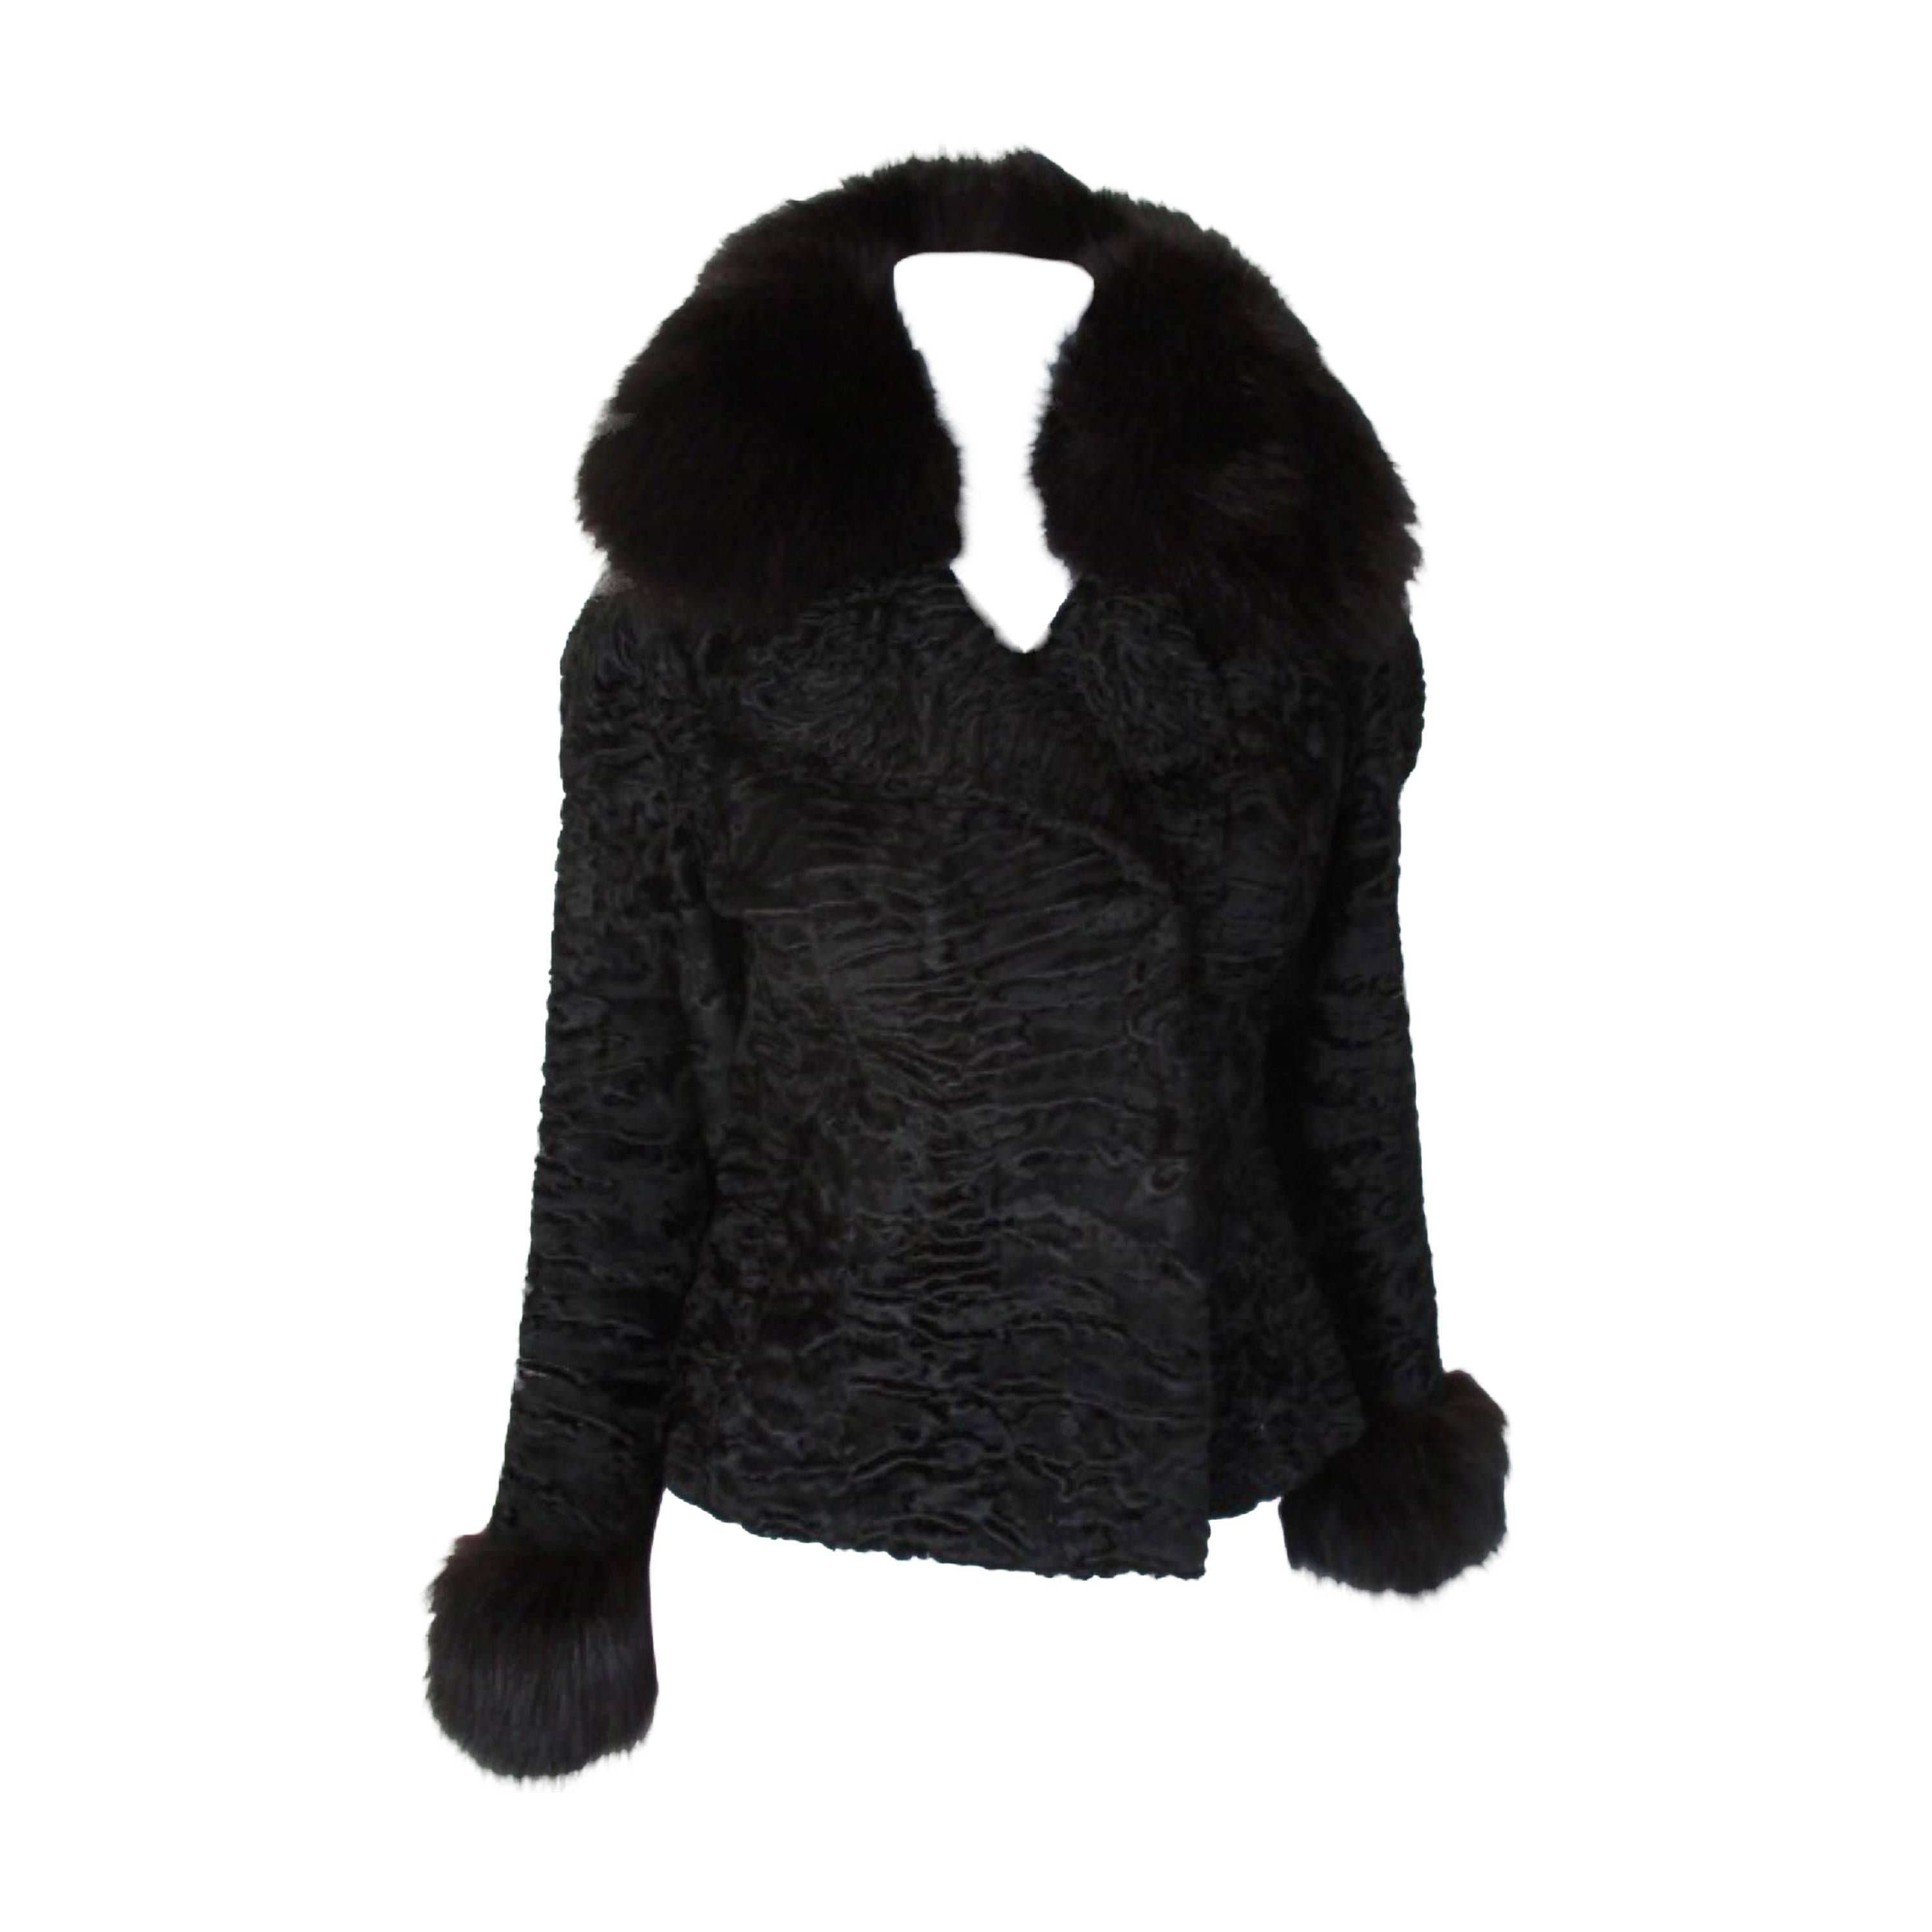 Black persian Lamb/Astrakhan fur jacket with fox details